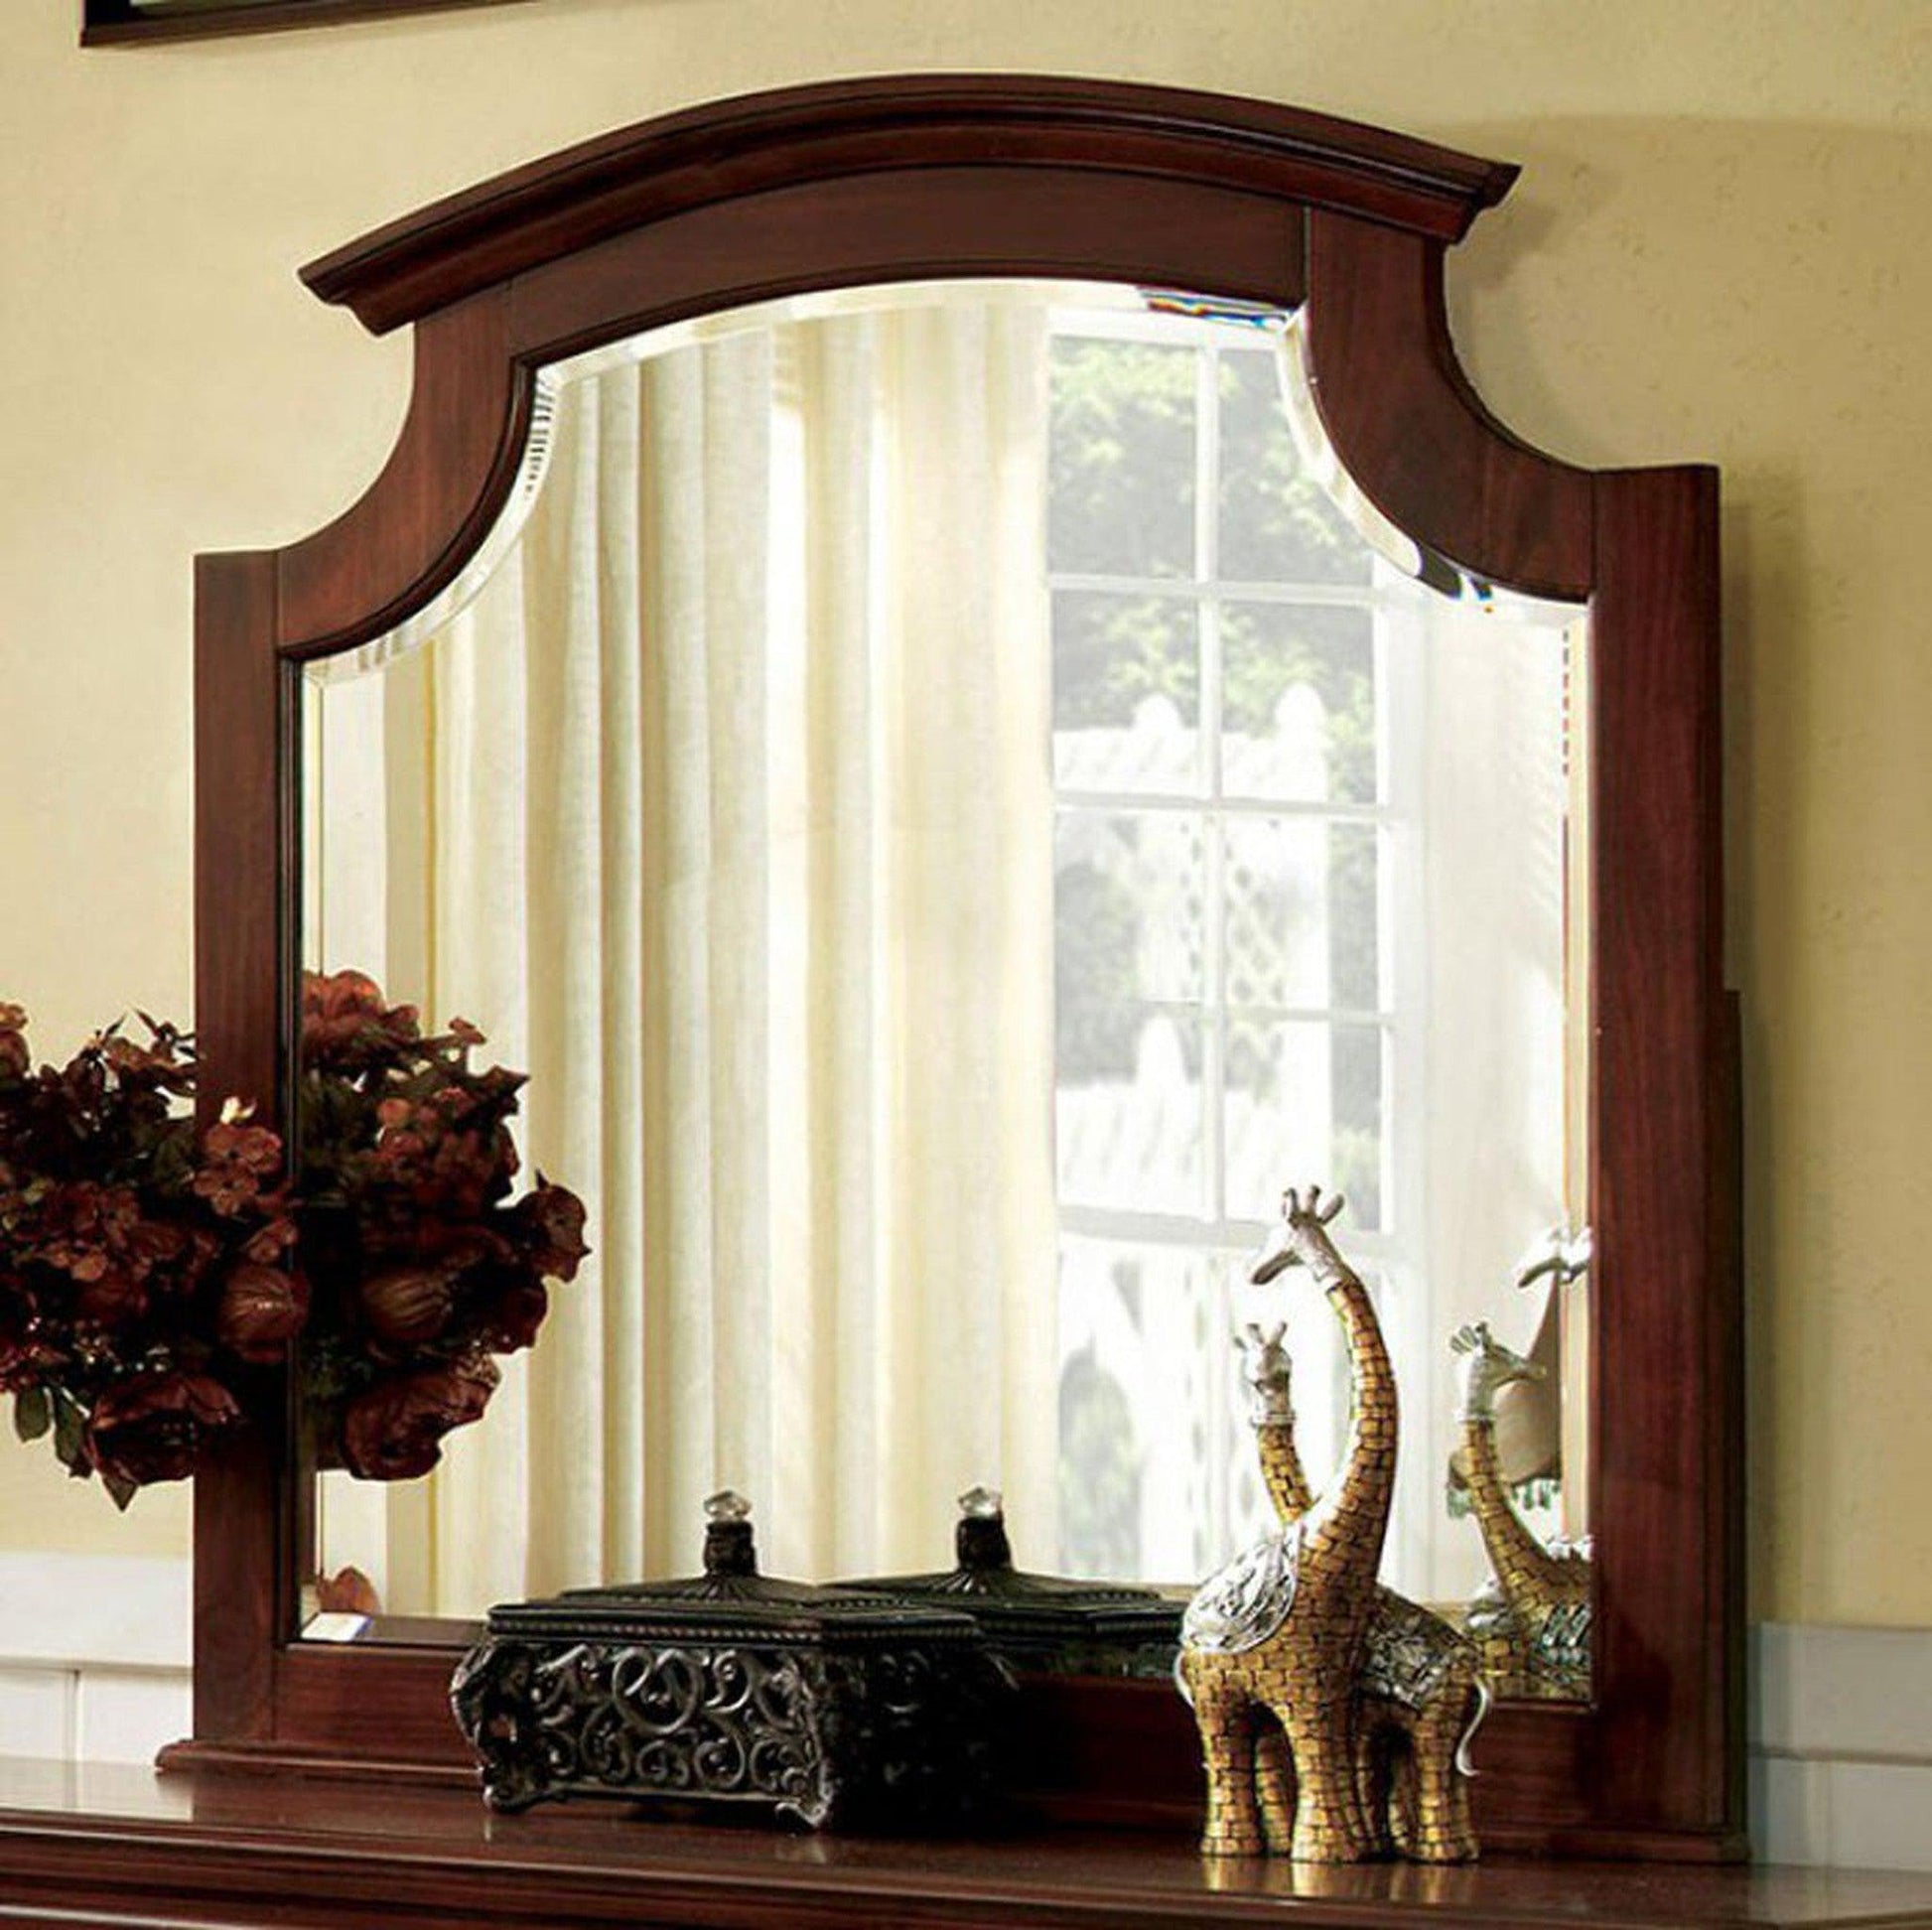 Benzara Gabrielle II Cherry European Style Wooden Framed Wall Mirror